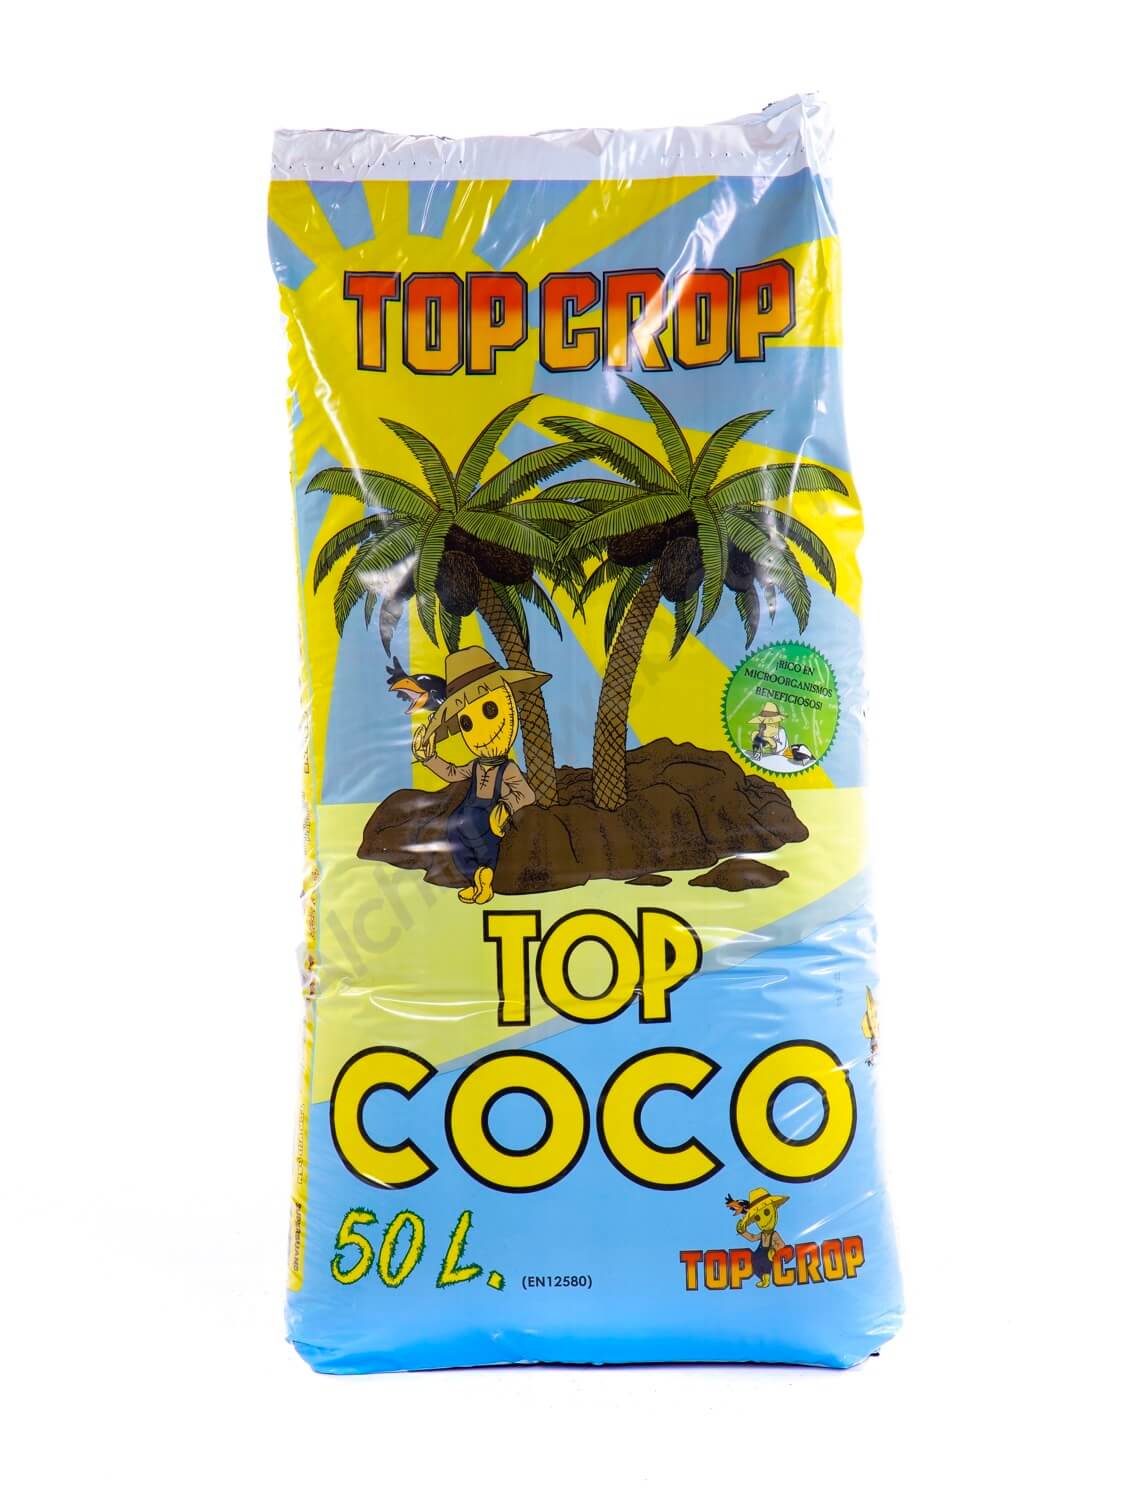 Top Coco